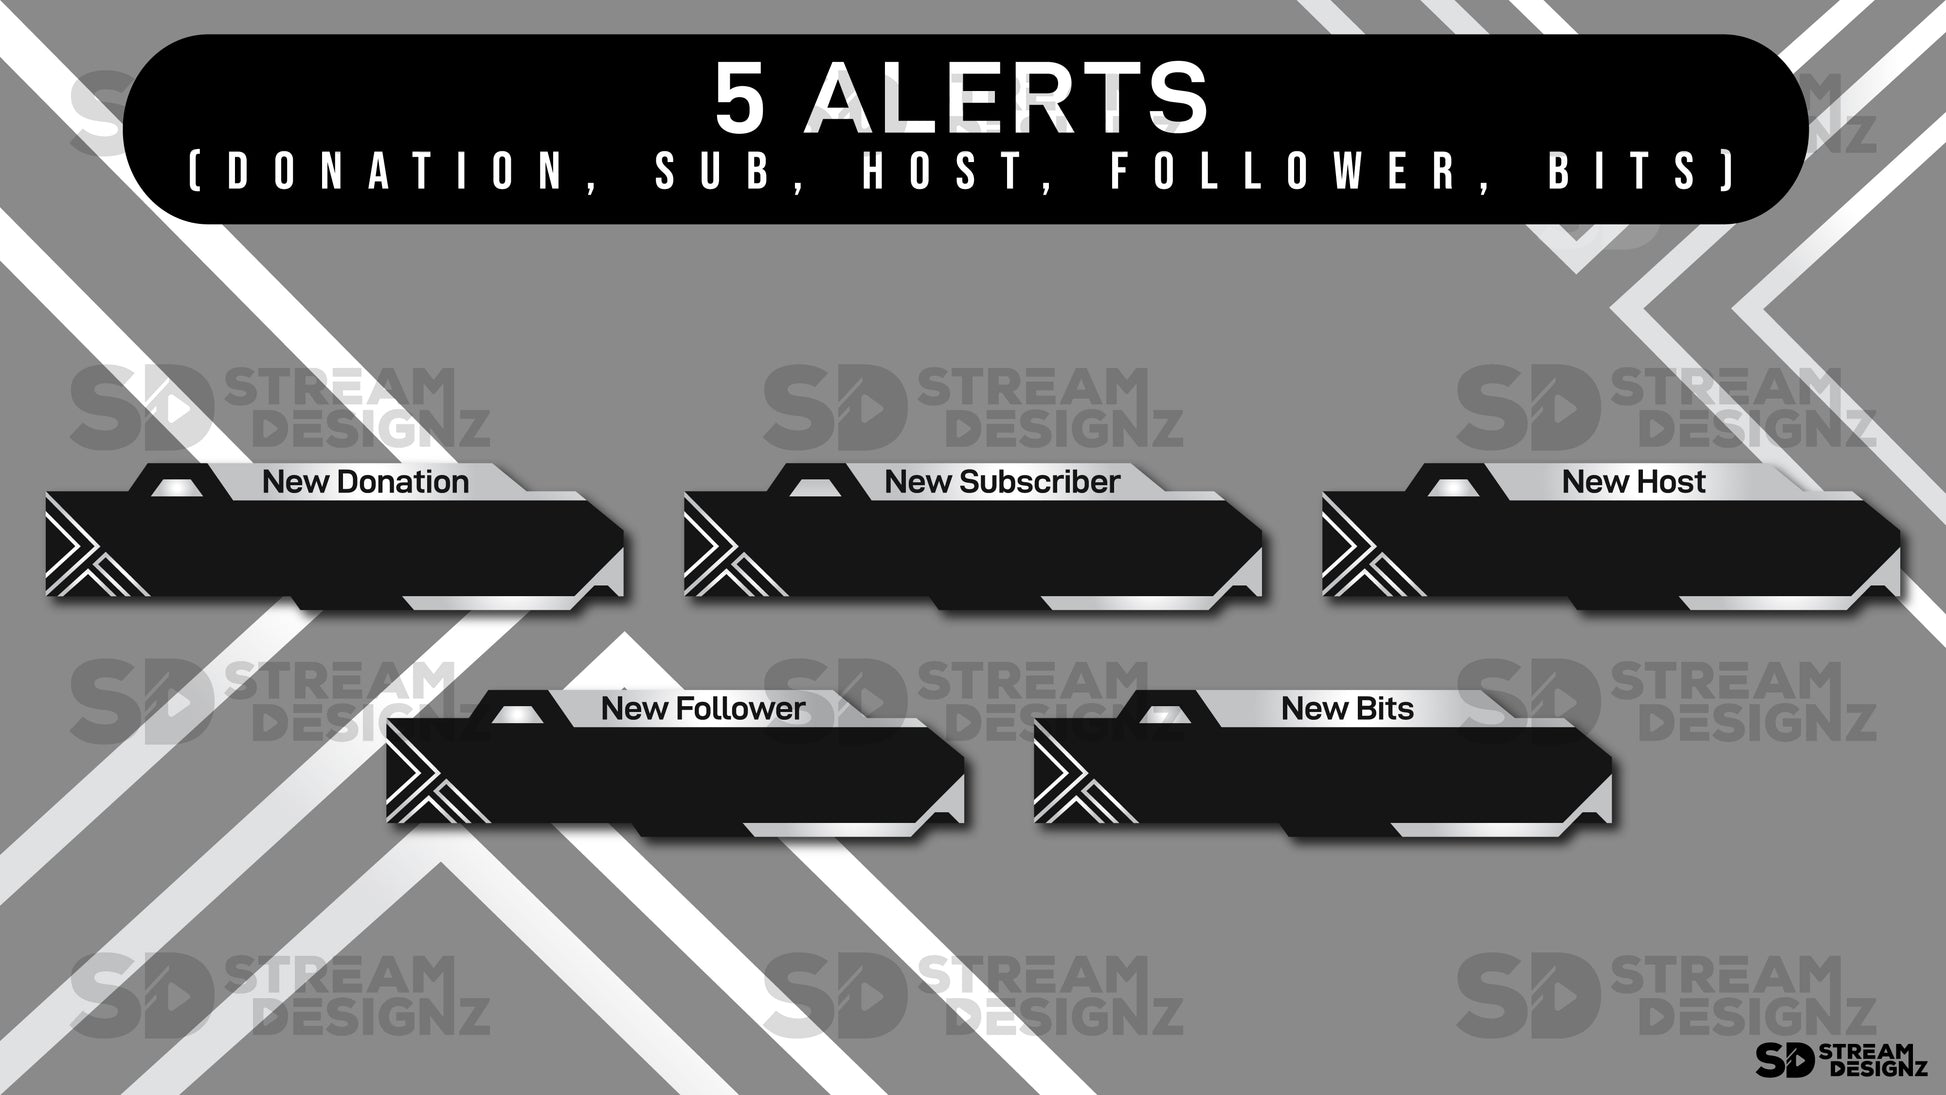 Static stream overlay package - 5 alerts - silhouette - stream designz